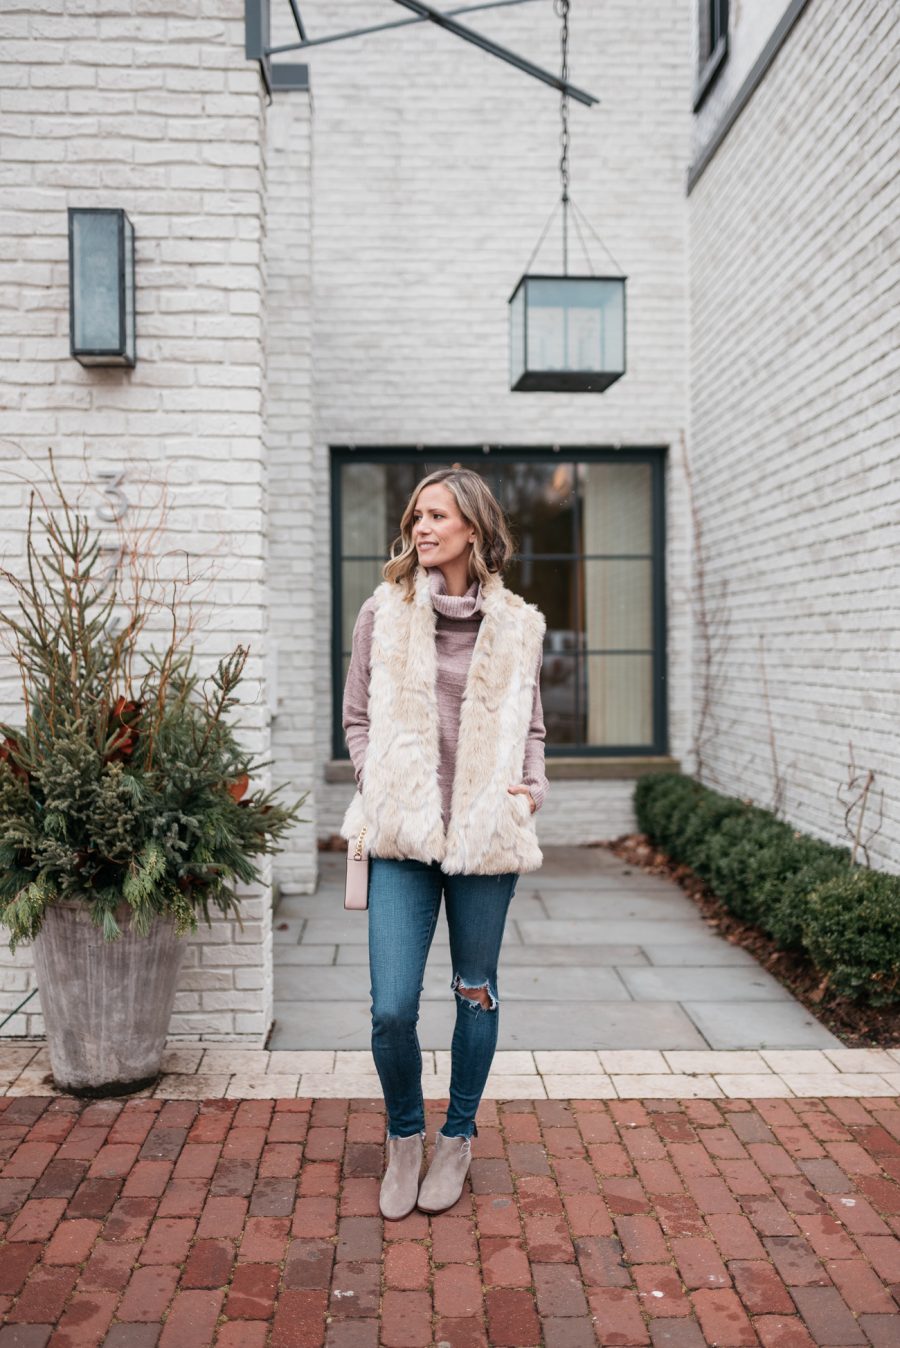 2019 blogging goals,
pink turtleneck, faux fur vest, skinny jeans, crossbody, and booties